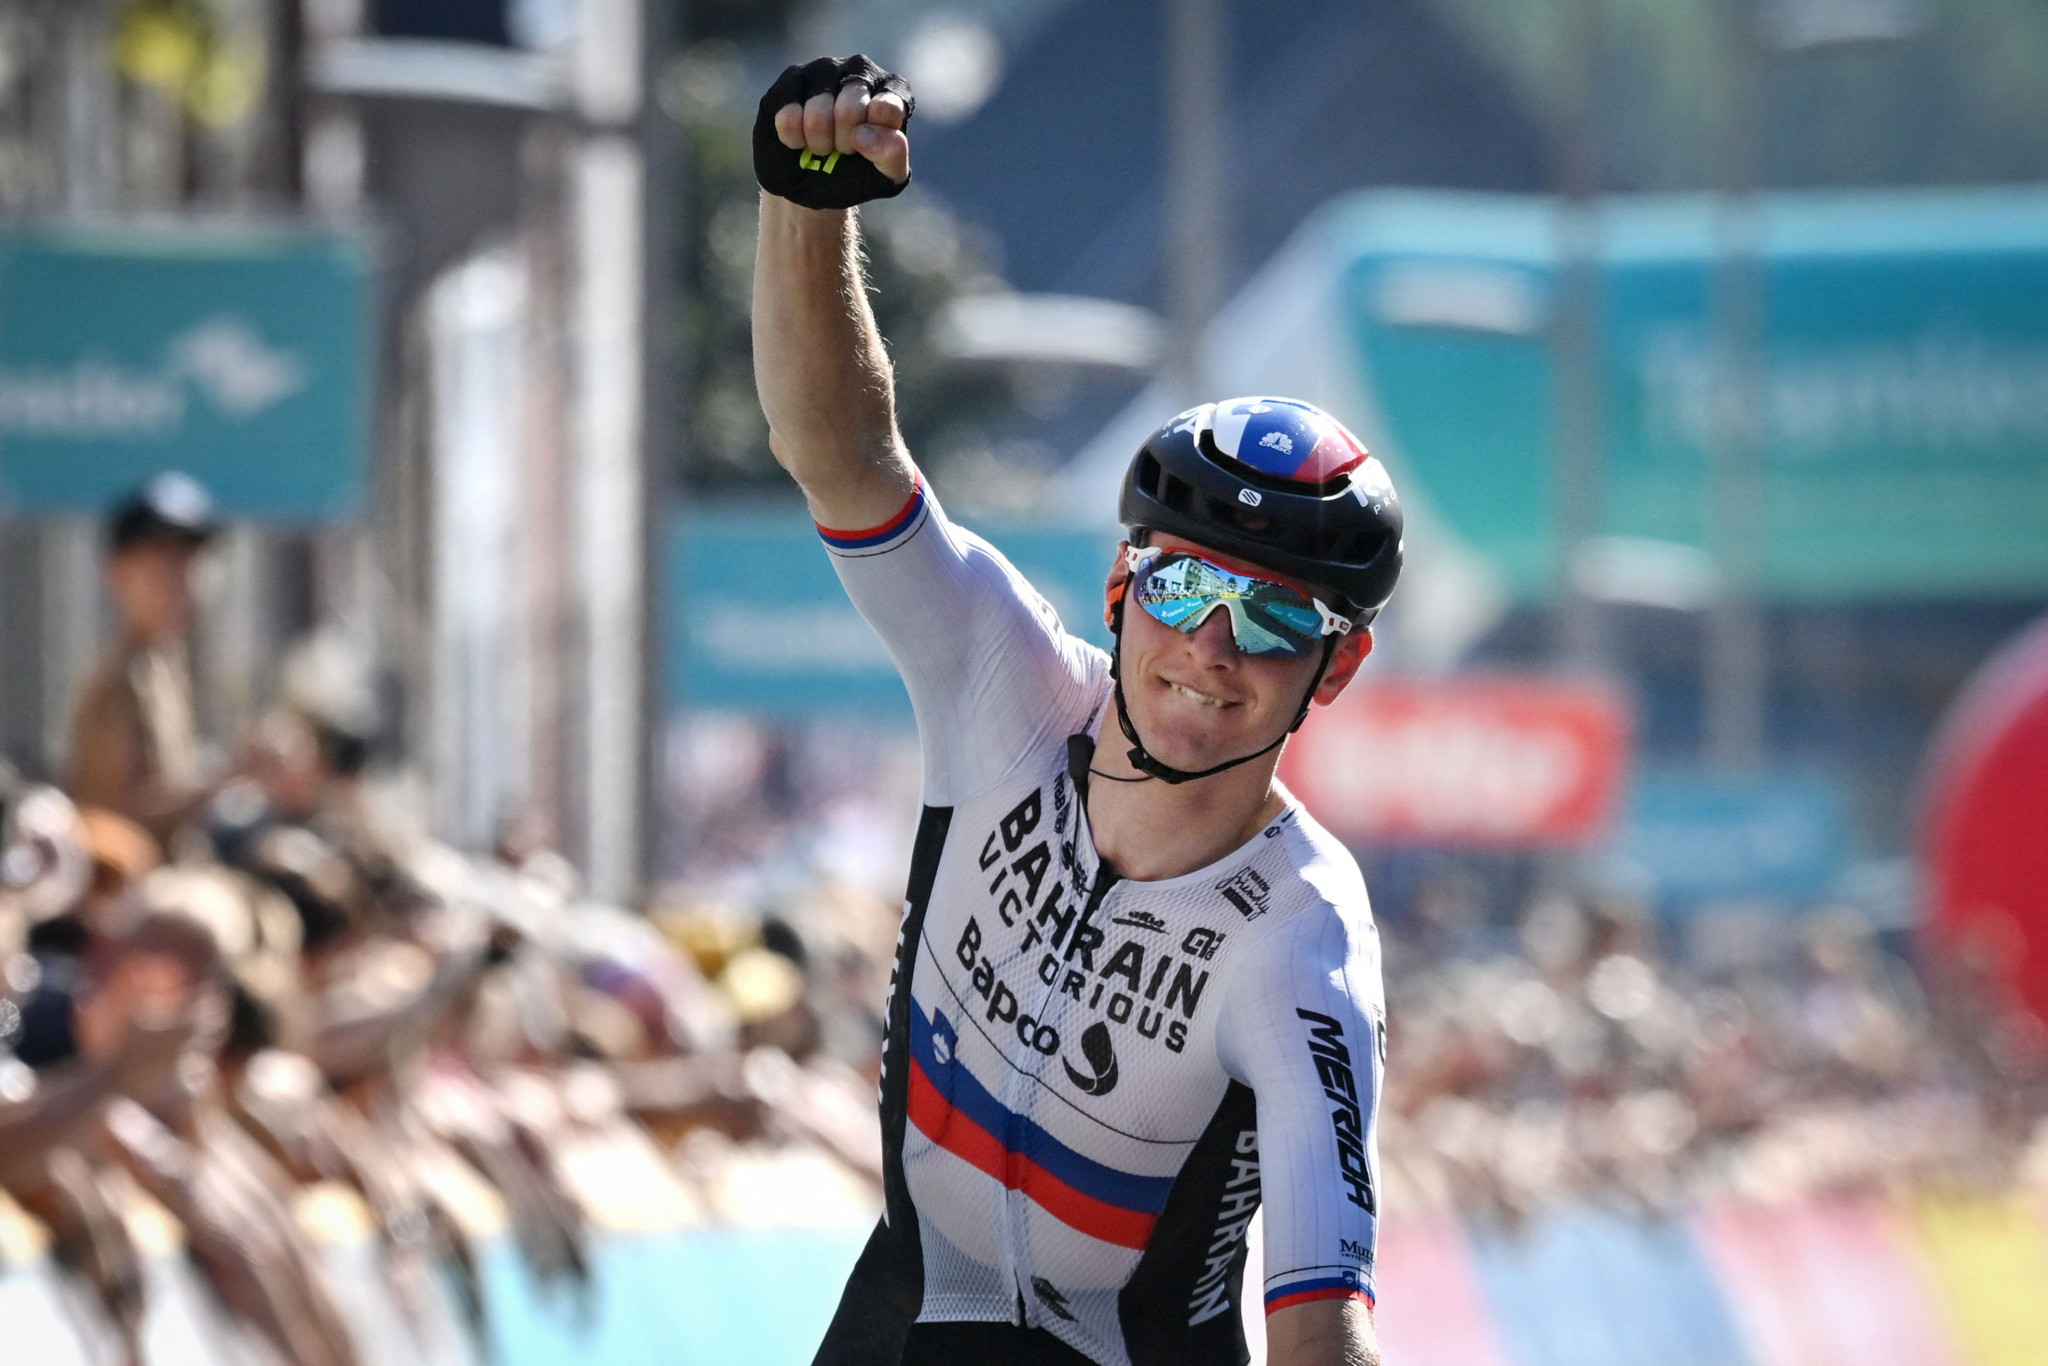 Mohorič triumphs at Milan-San Remo after decisive late push